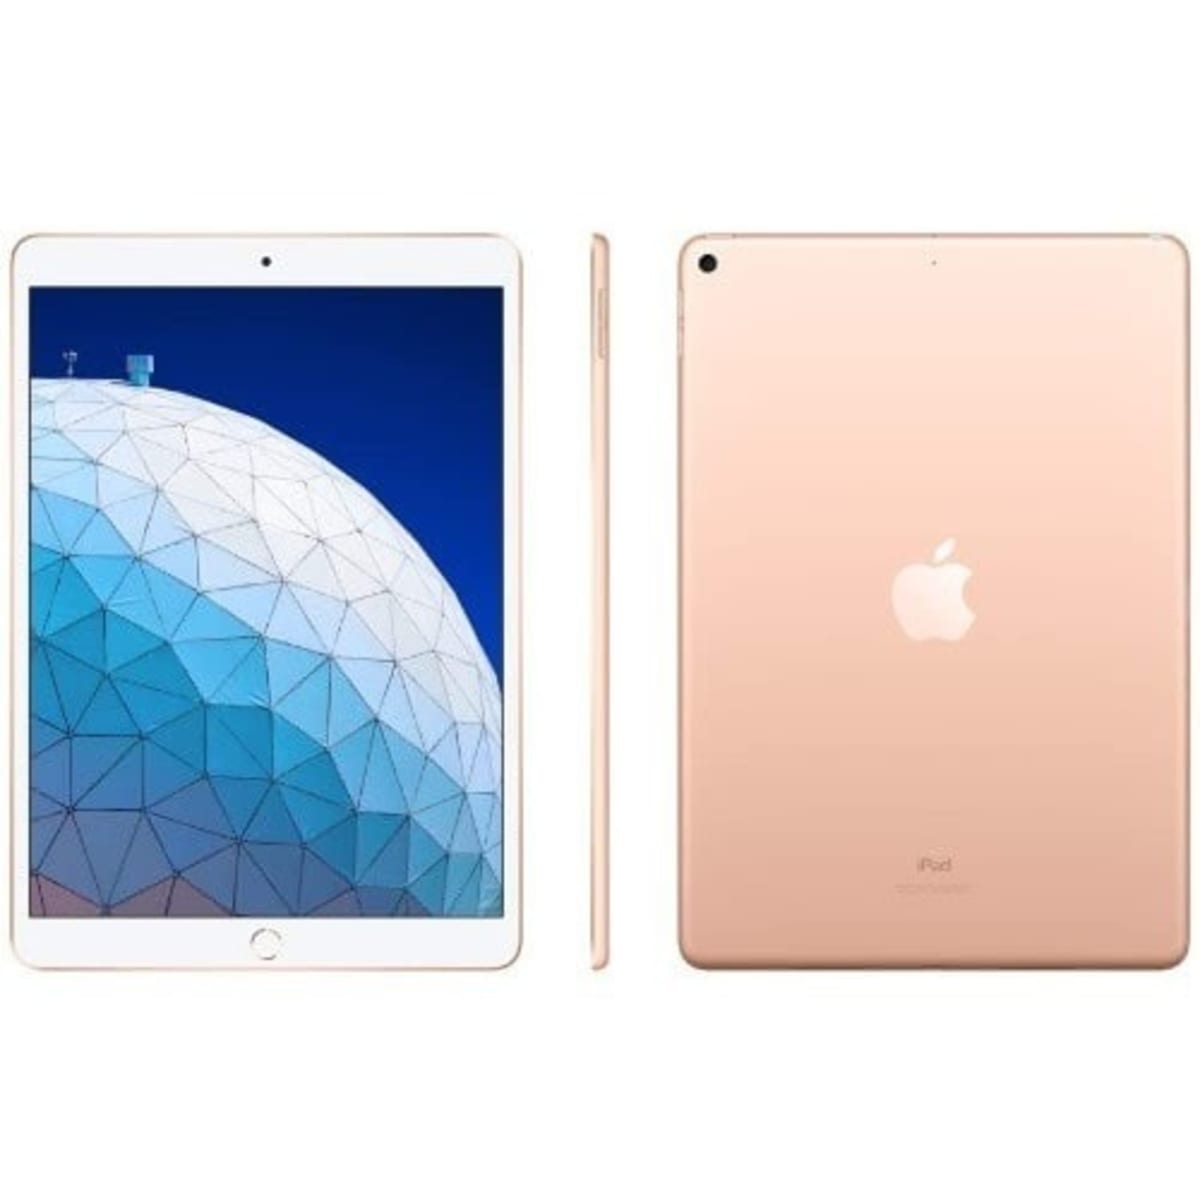 Apple iPad Air3 -3GB RAM - 256GB - Wifi Only - Gold | Konga Online